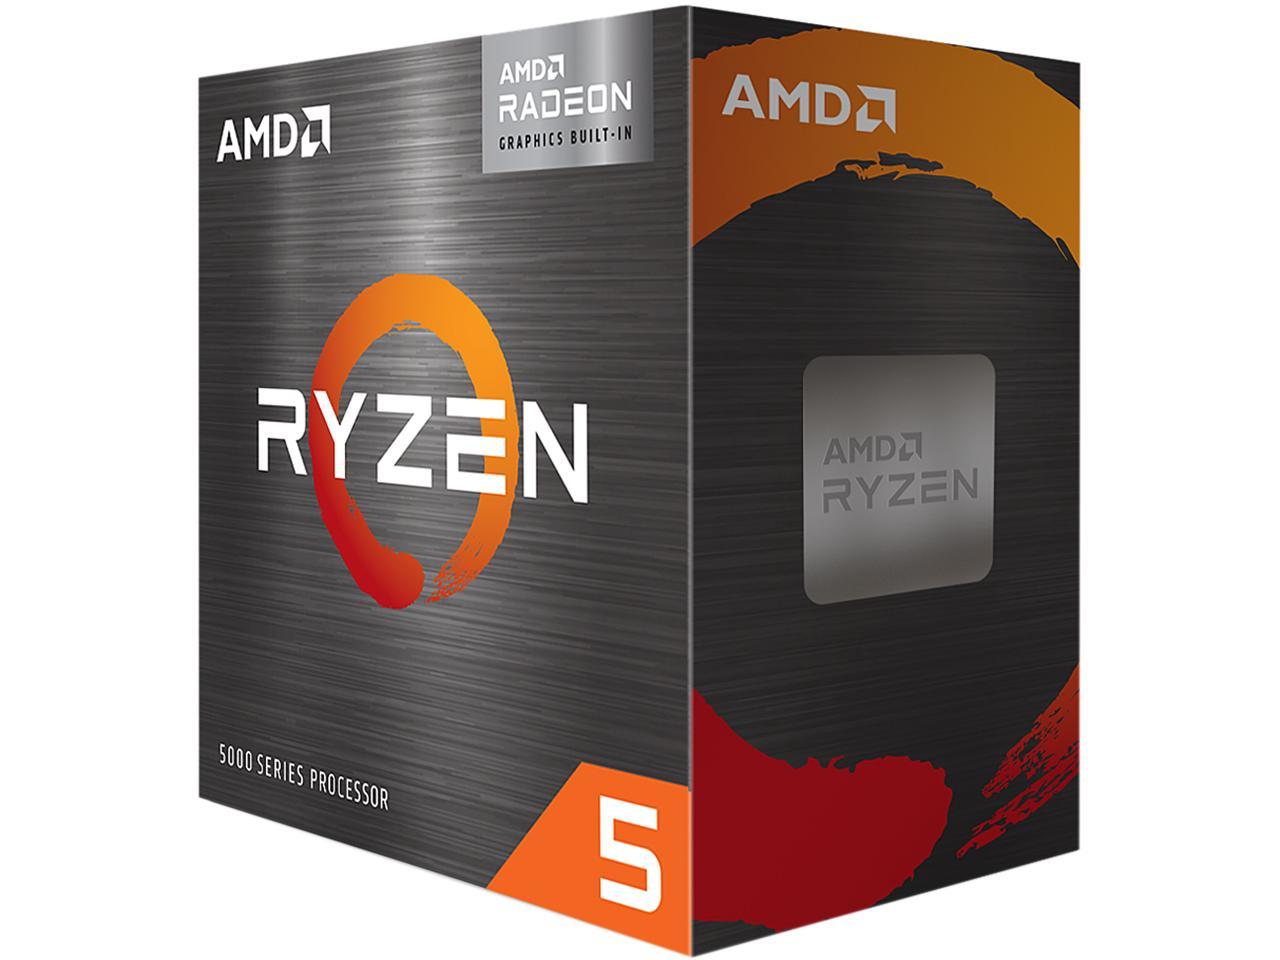 AMD Ryzen 5 5600G CPU + 16 GB Team T-FORCE VULCAN Z RAM DDR4 3200 Bundle $149 + Free Shipping